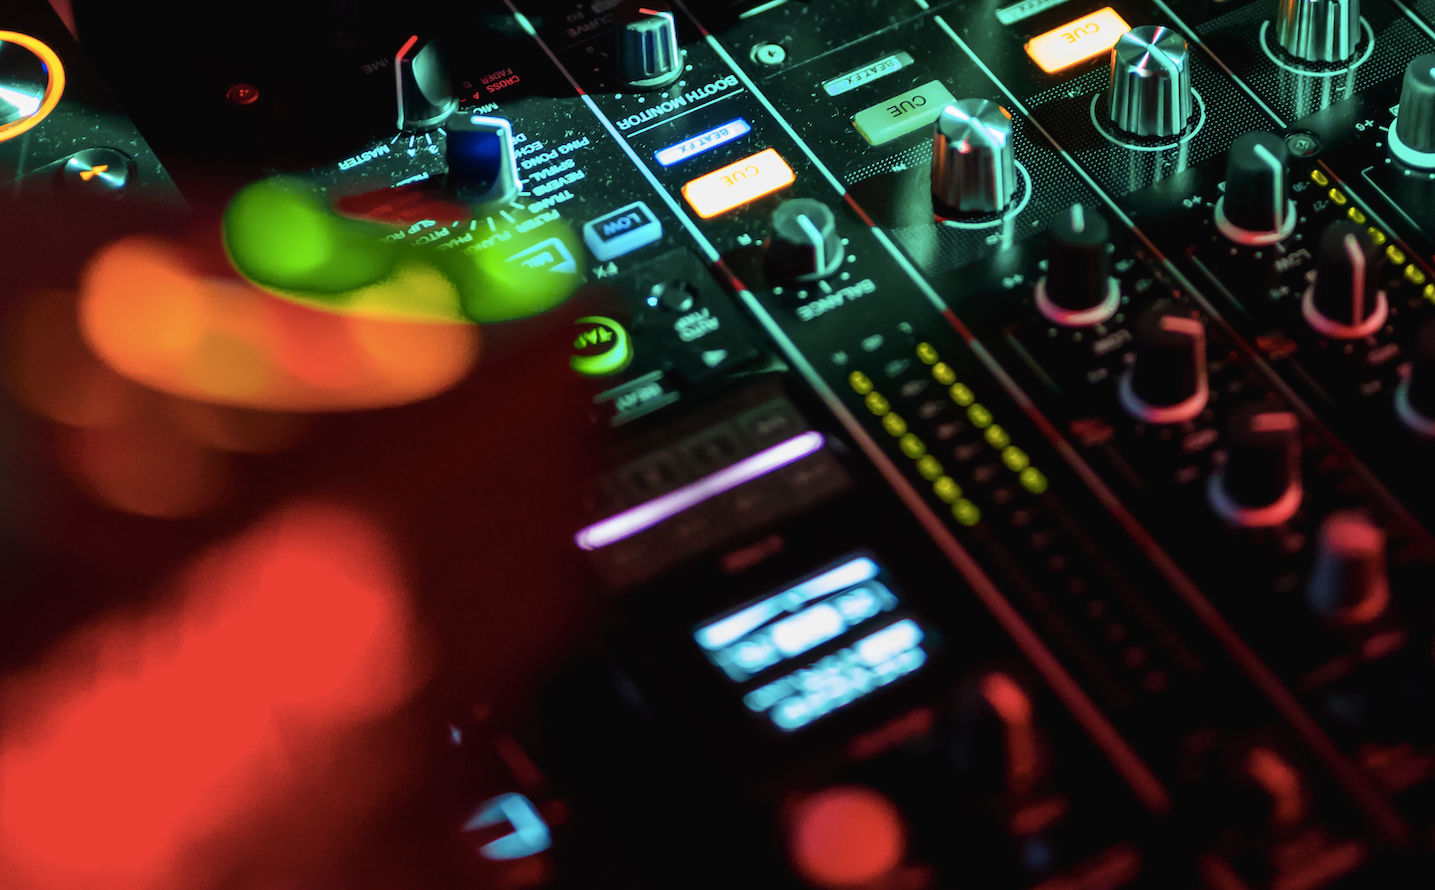 Let’s Trance: Asian DJs Changing the Genre